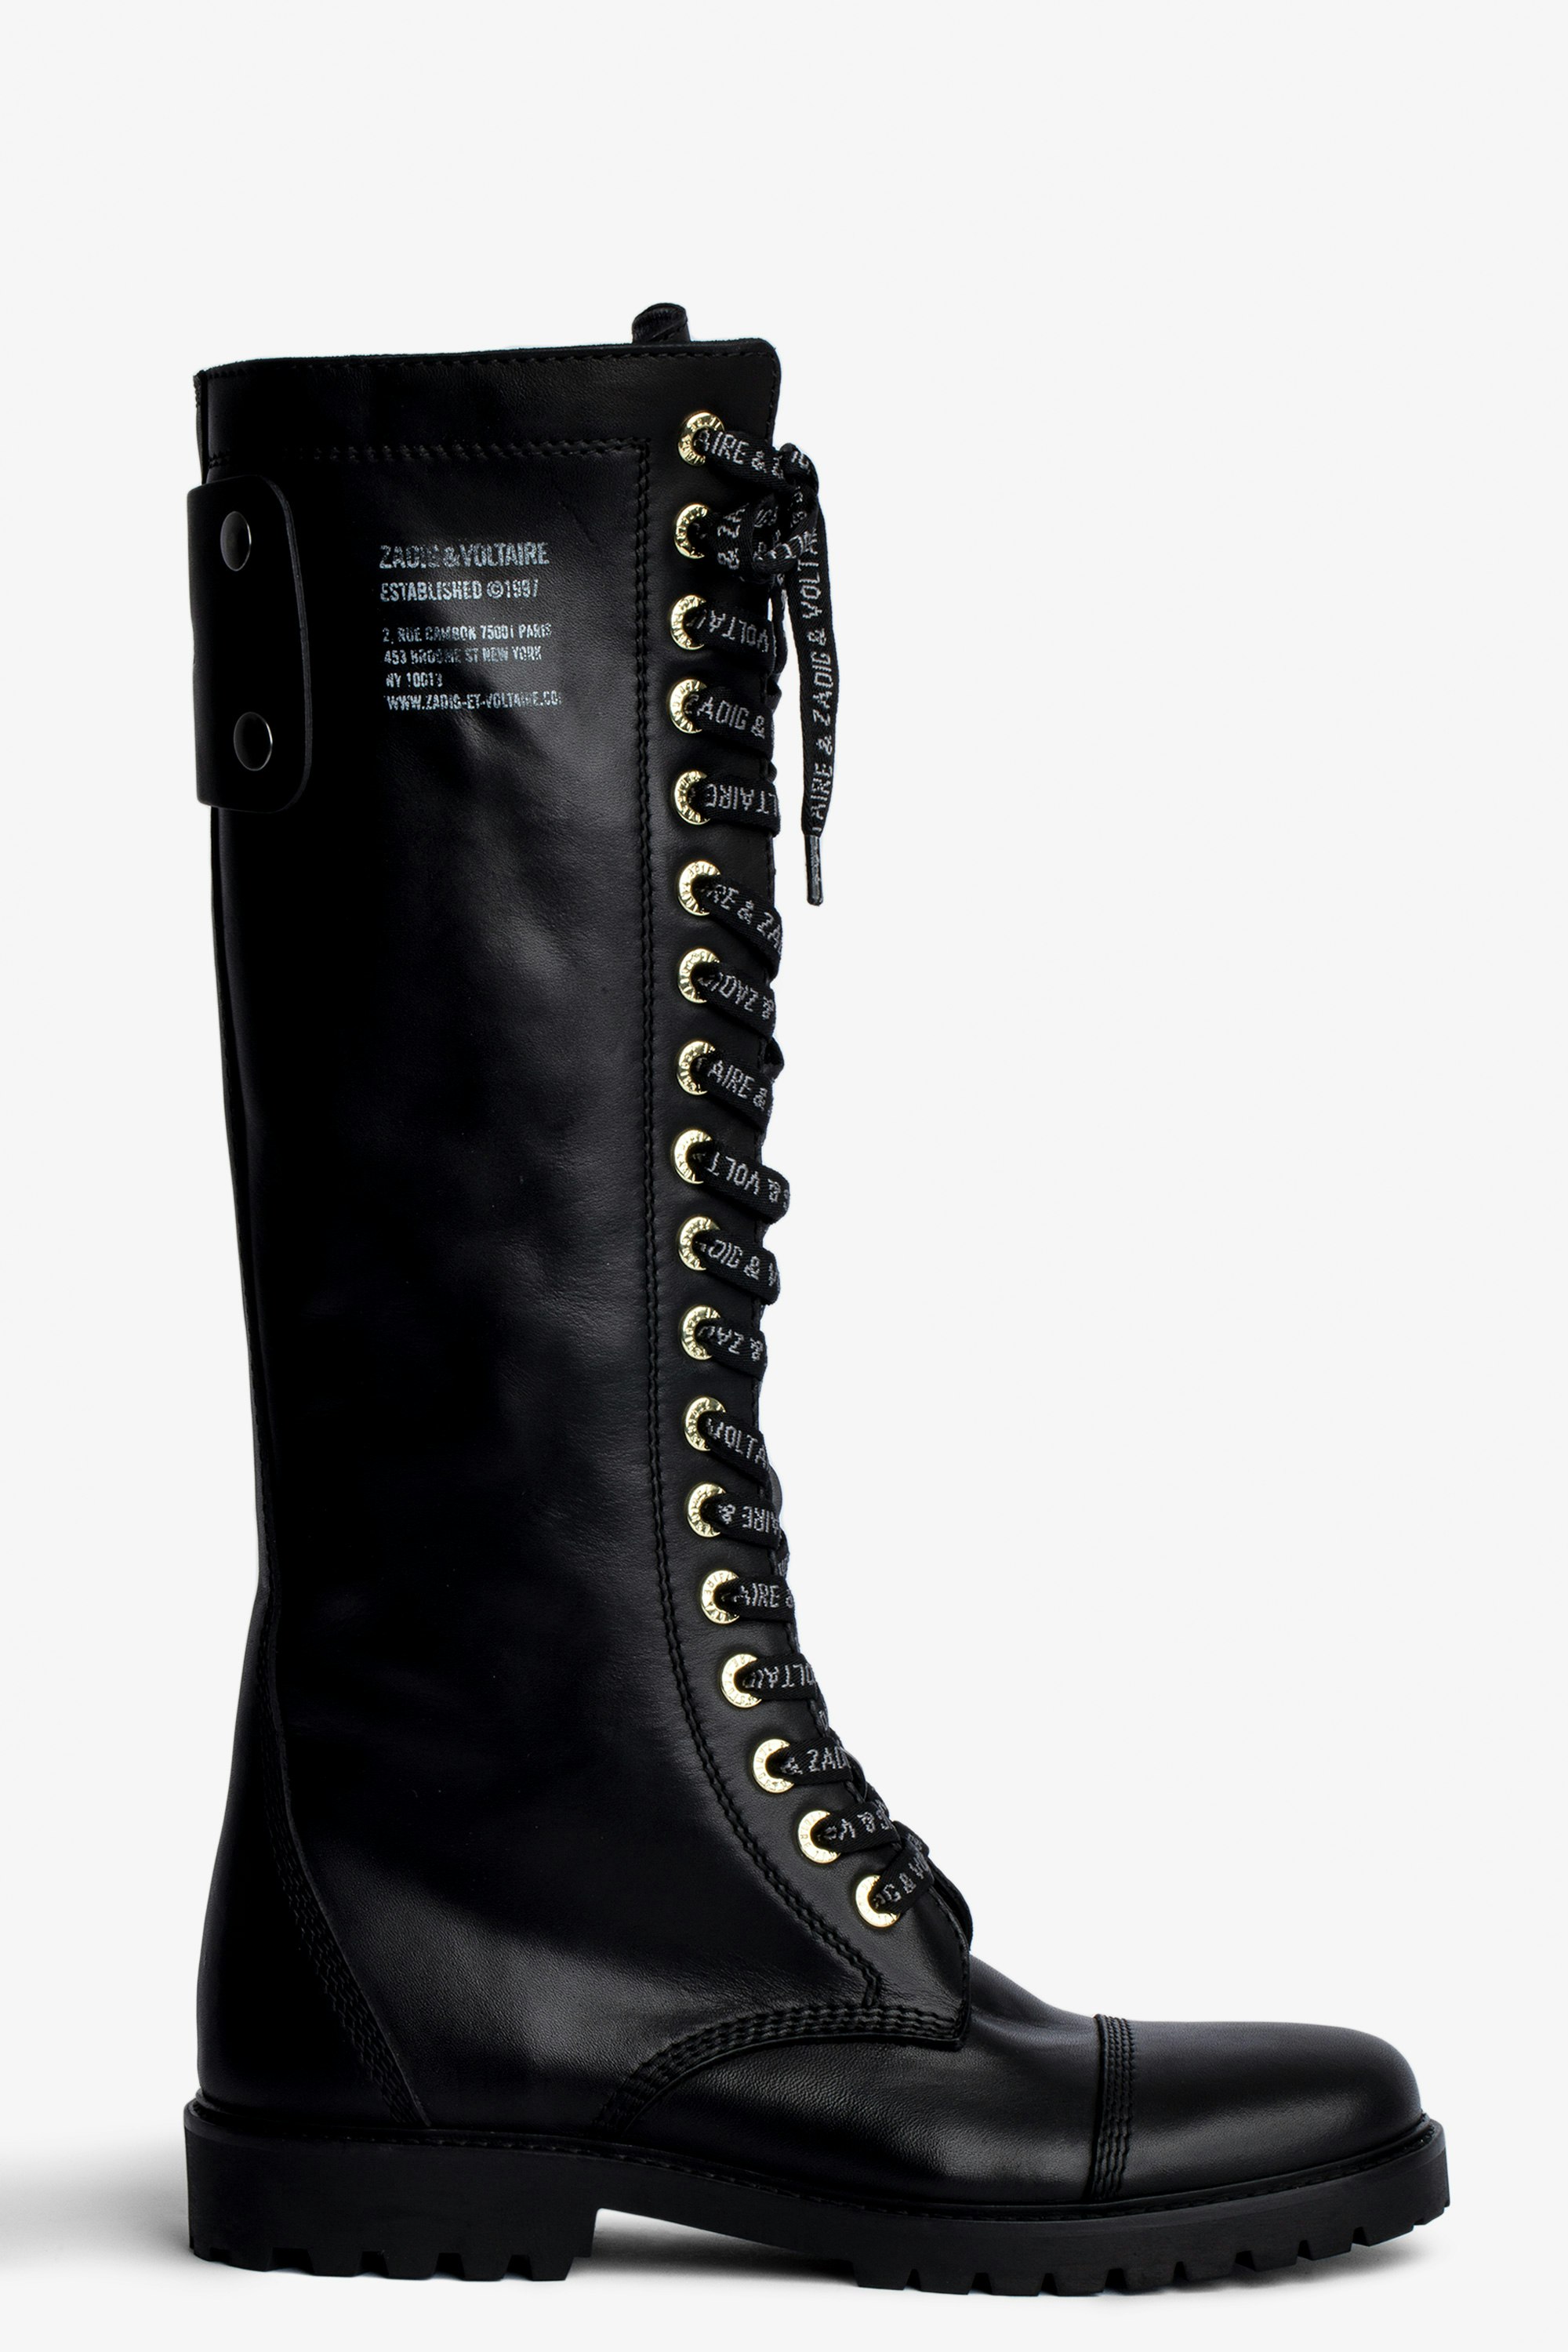 Joe High Boots - Women’s black leather high boots